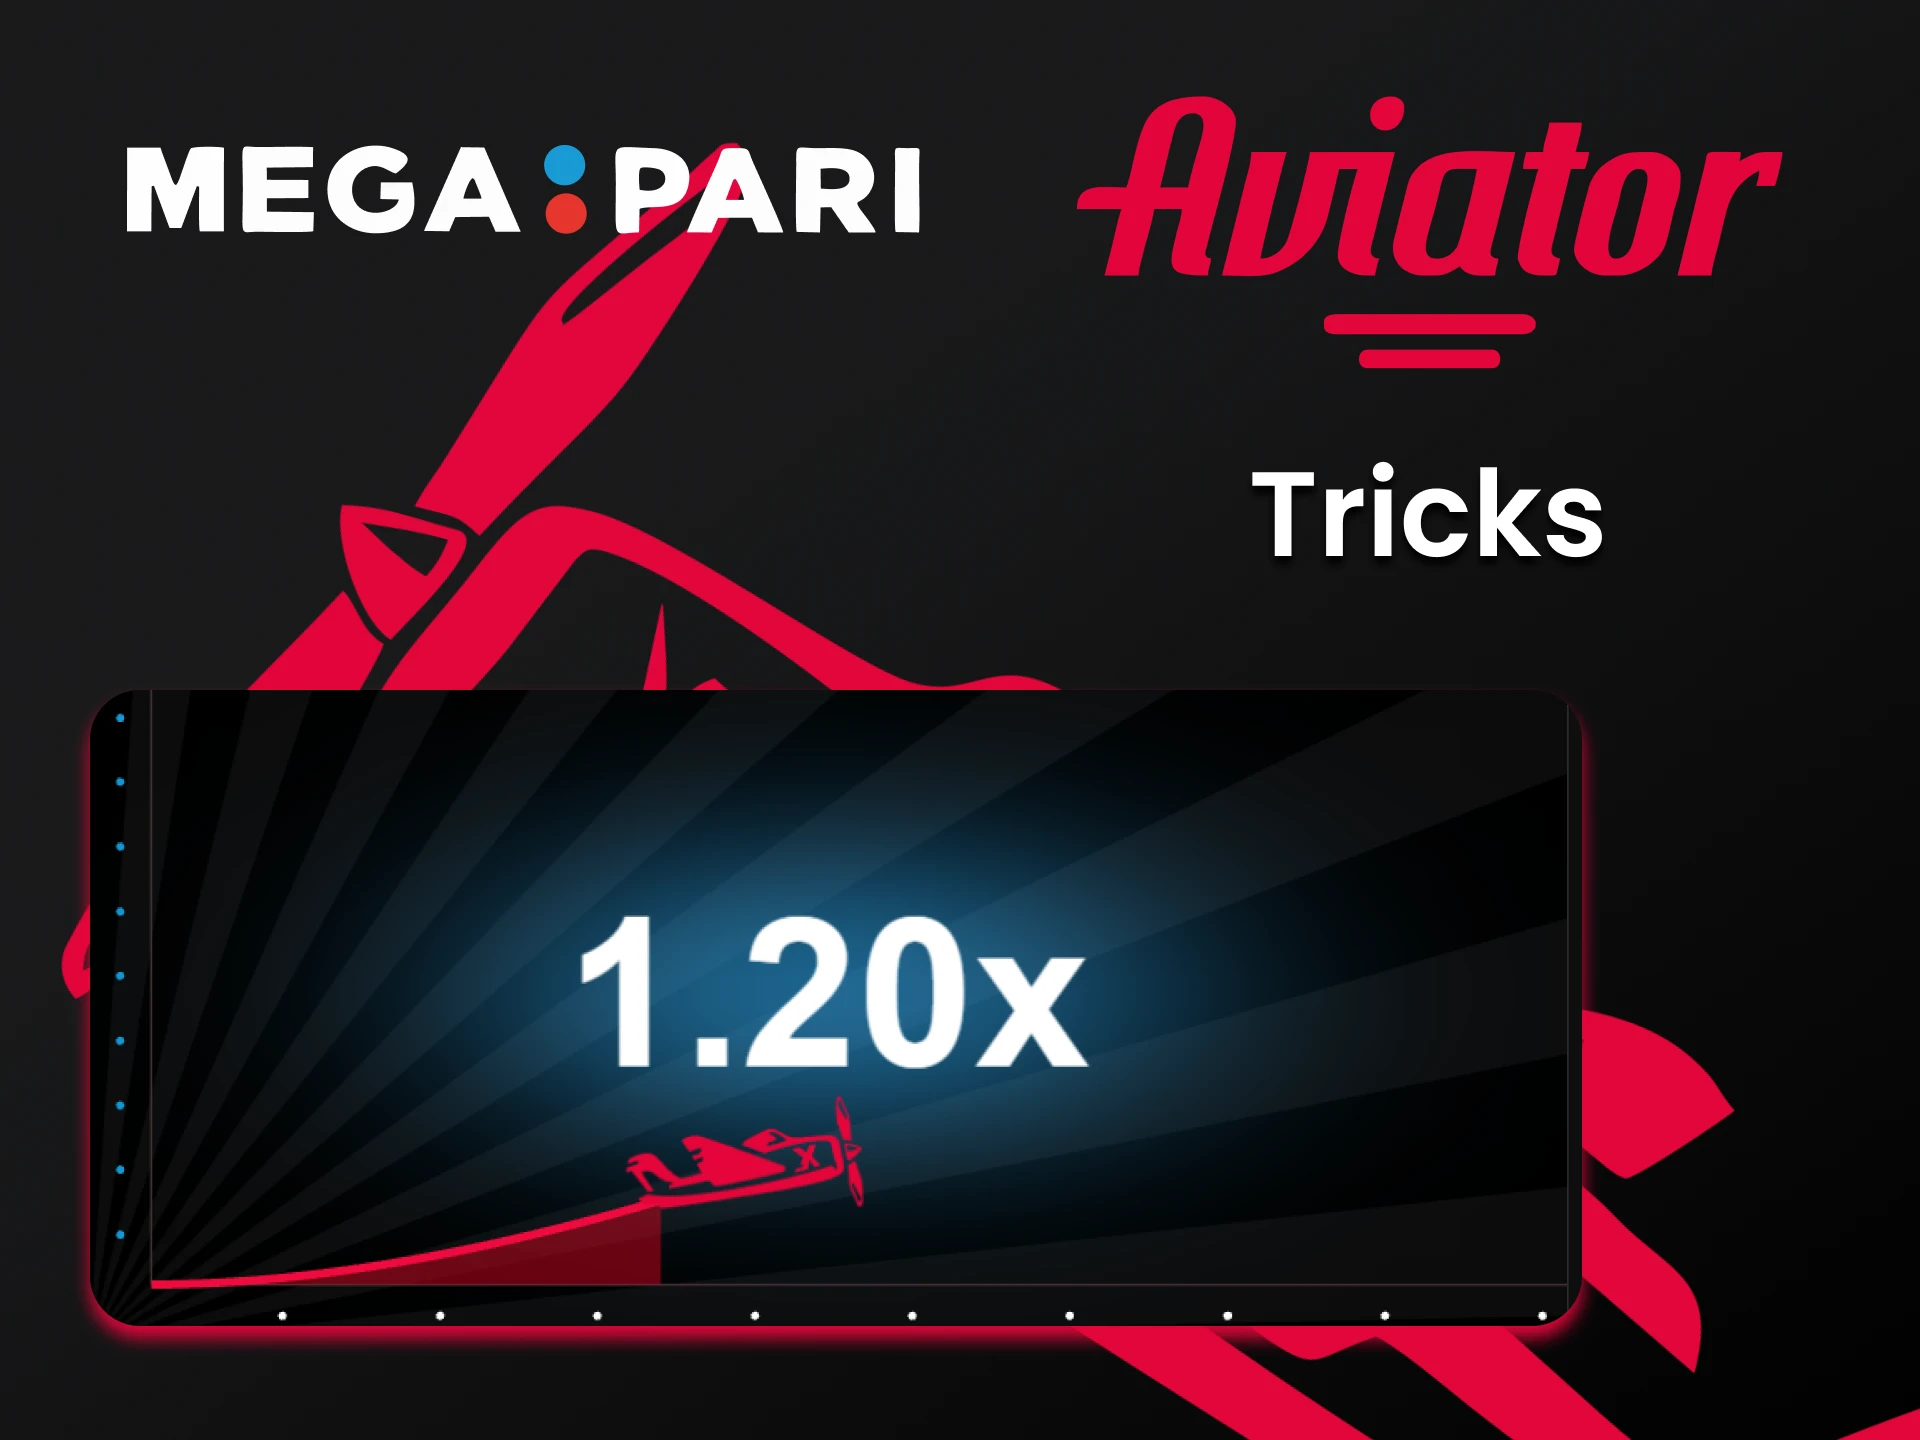 Use all methods to win in Aviator on Megapari.